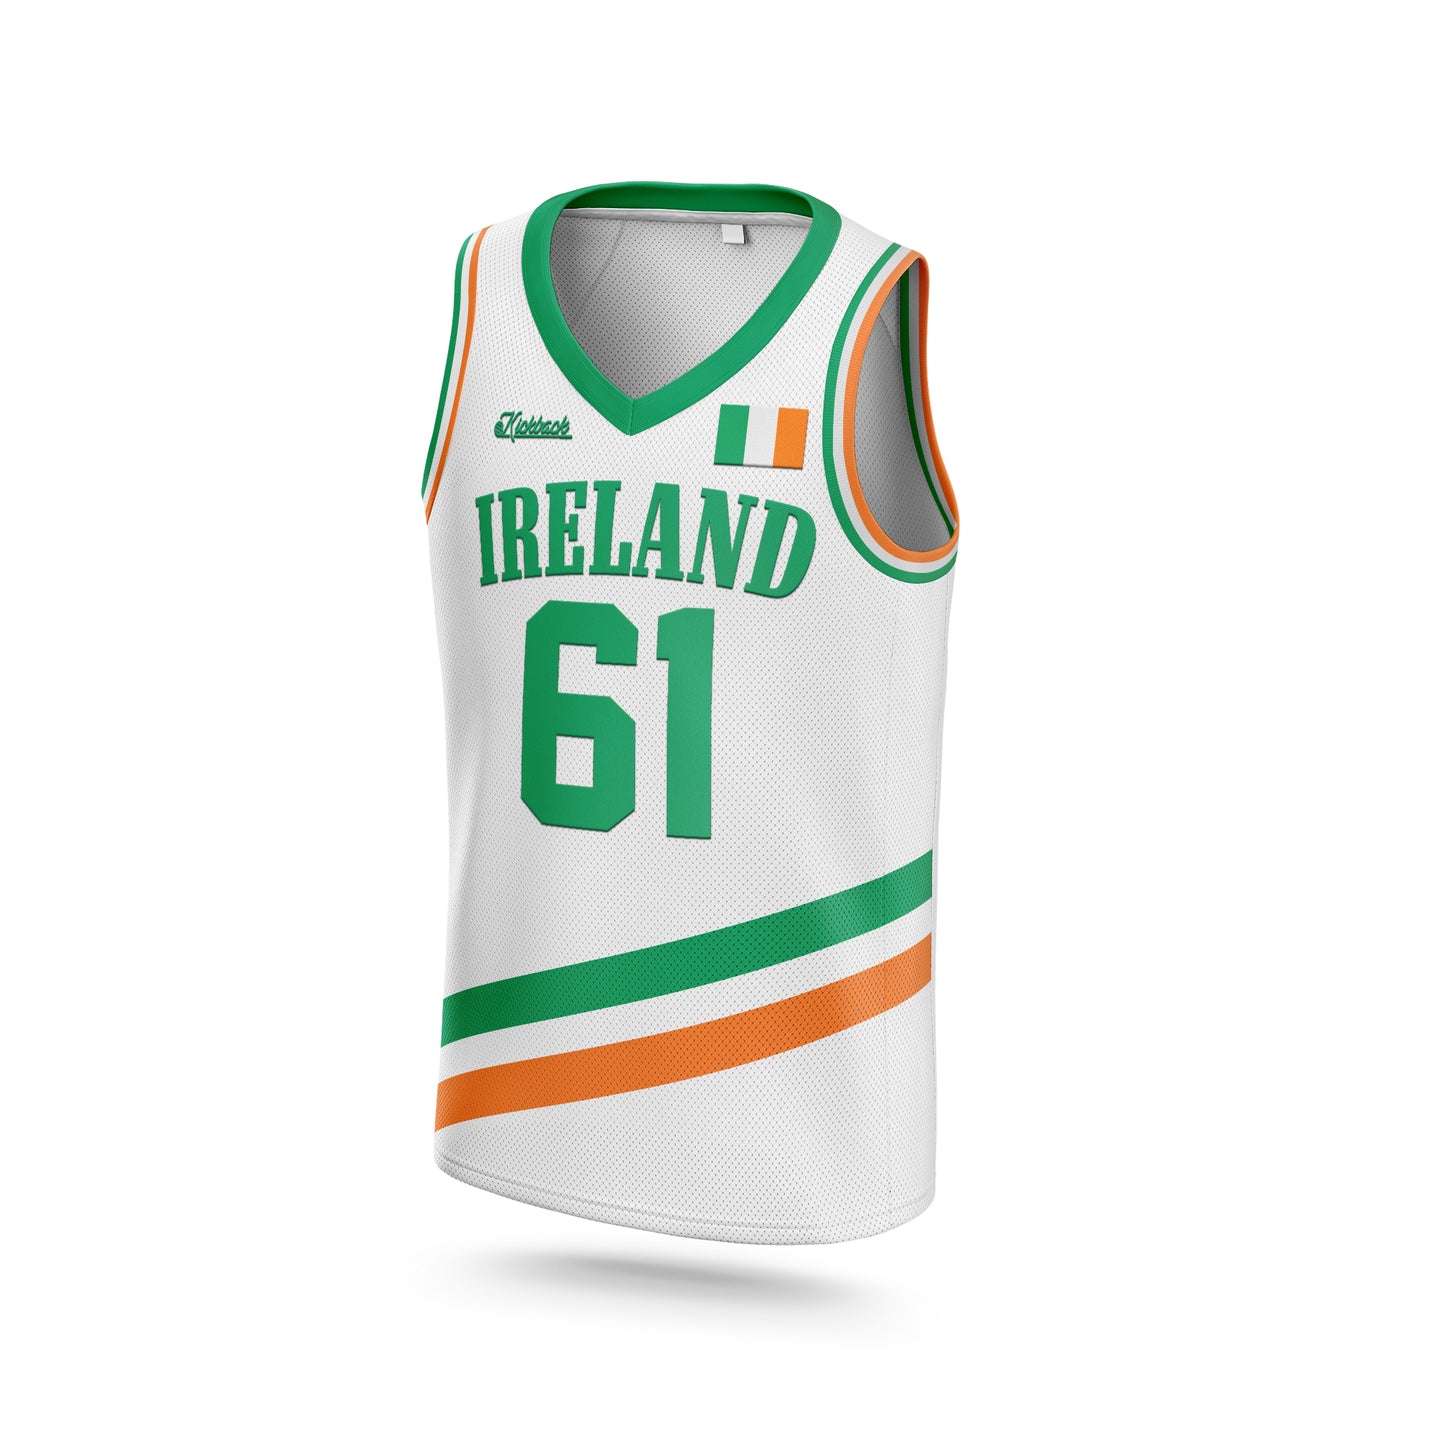 Ireland - Rory Mcilroy (Basketball)